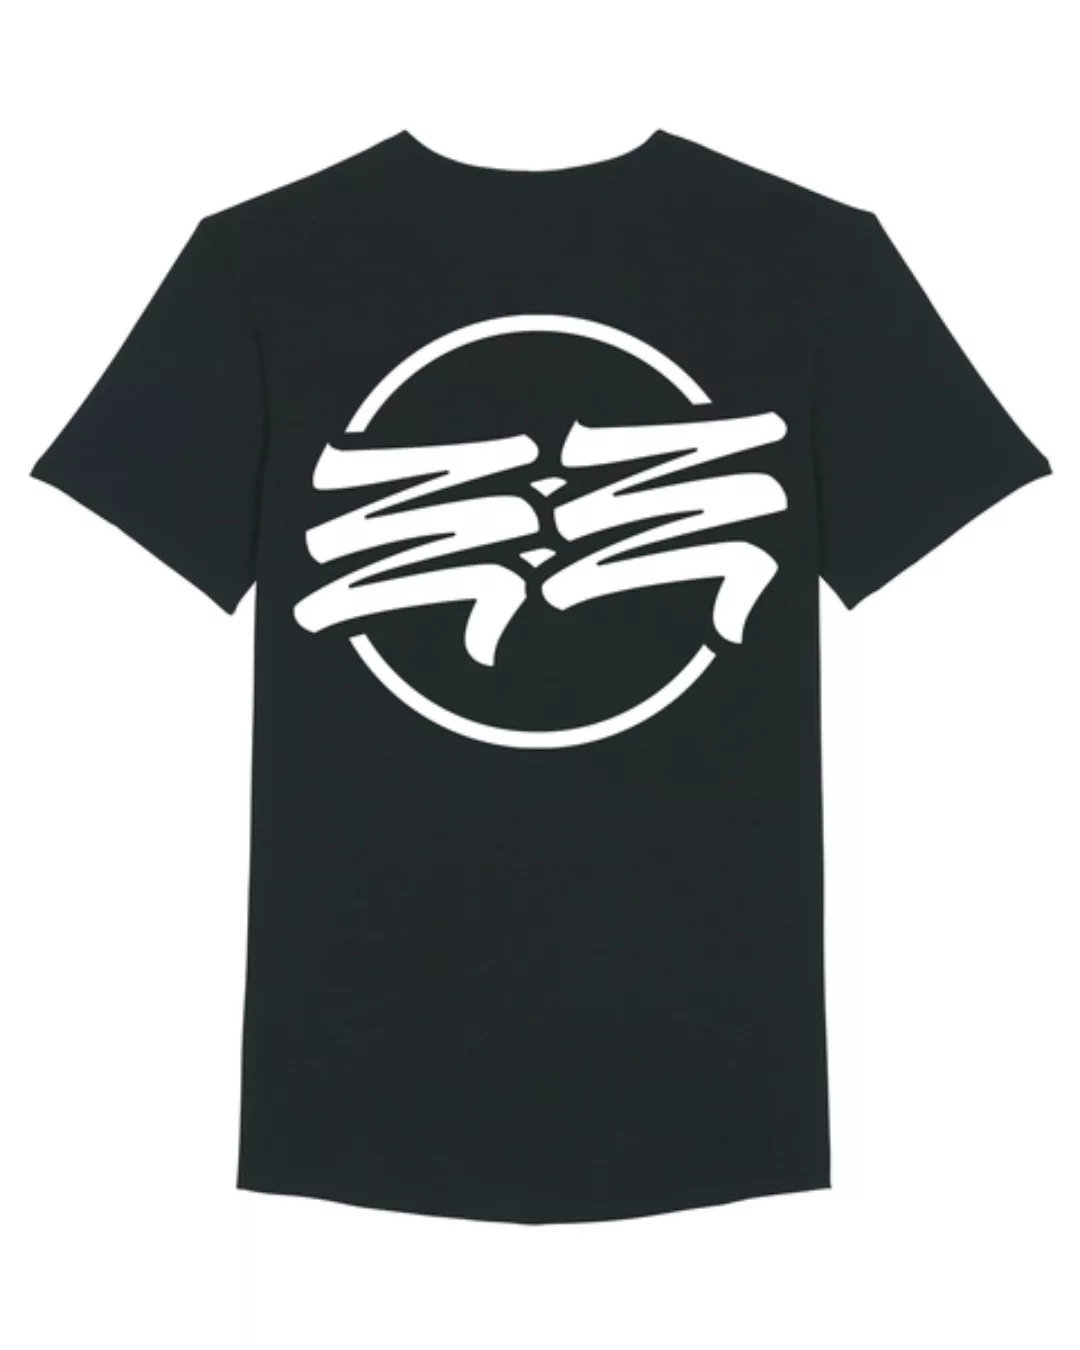 Eco Empire Crewlogo 01 Small | Long Unisex T-shirt günstig online kaufen